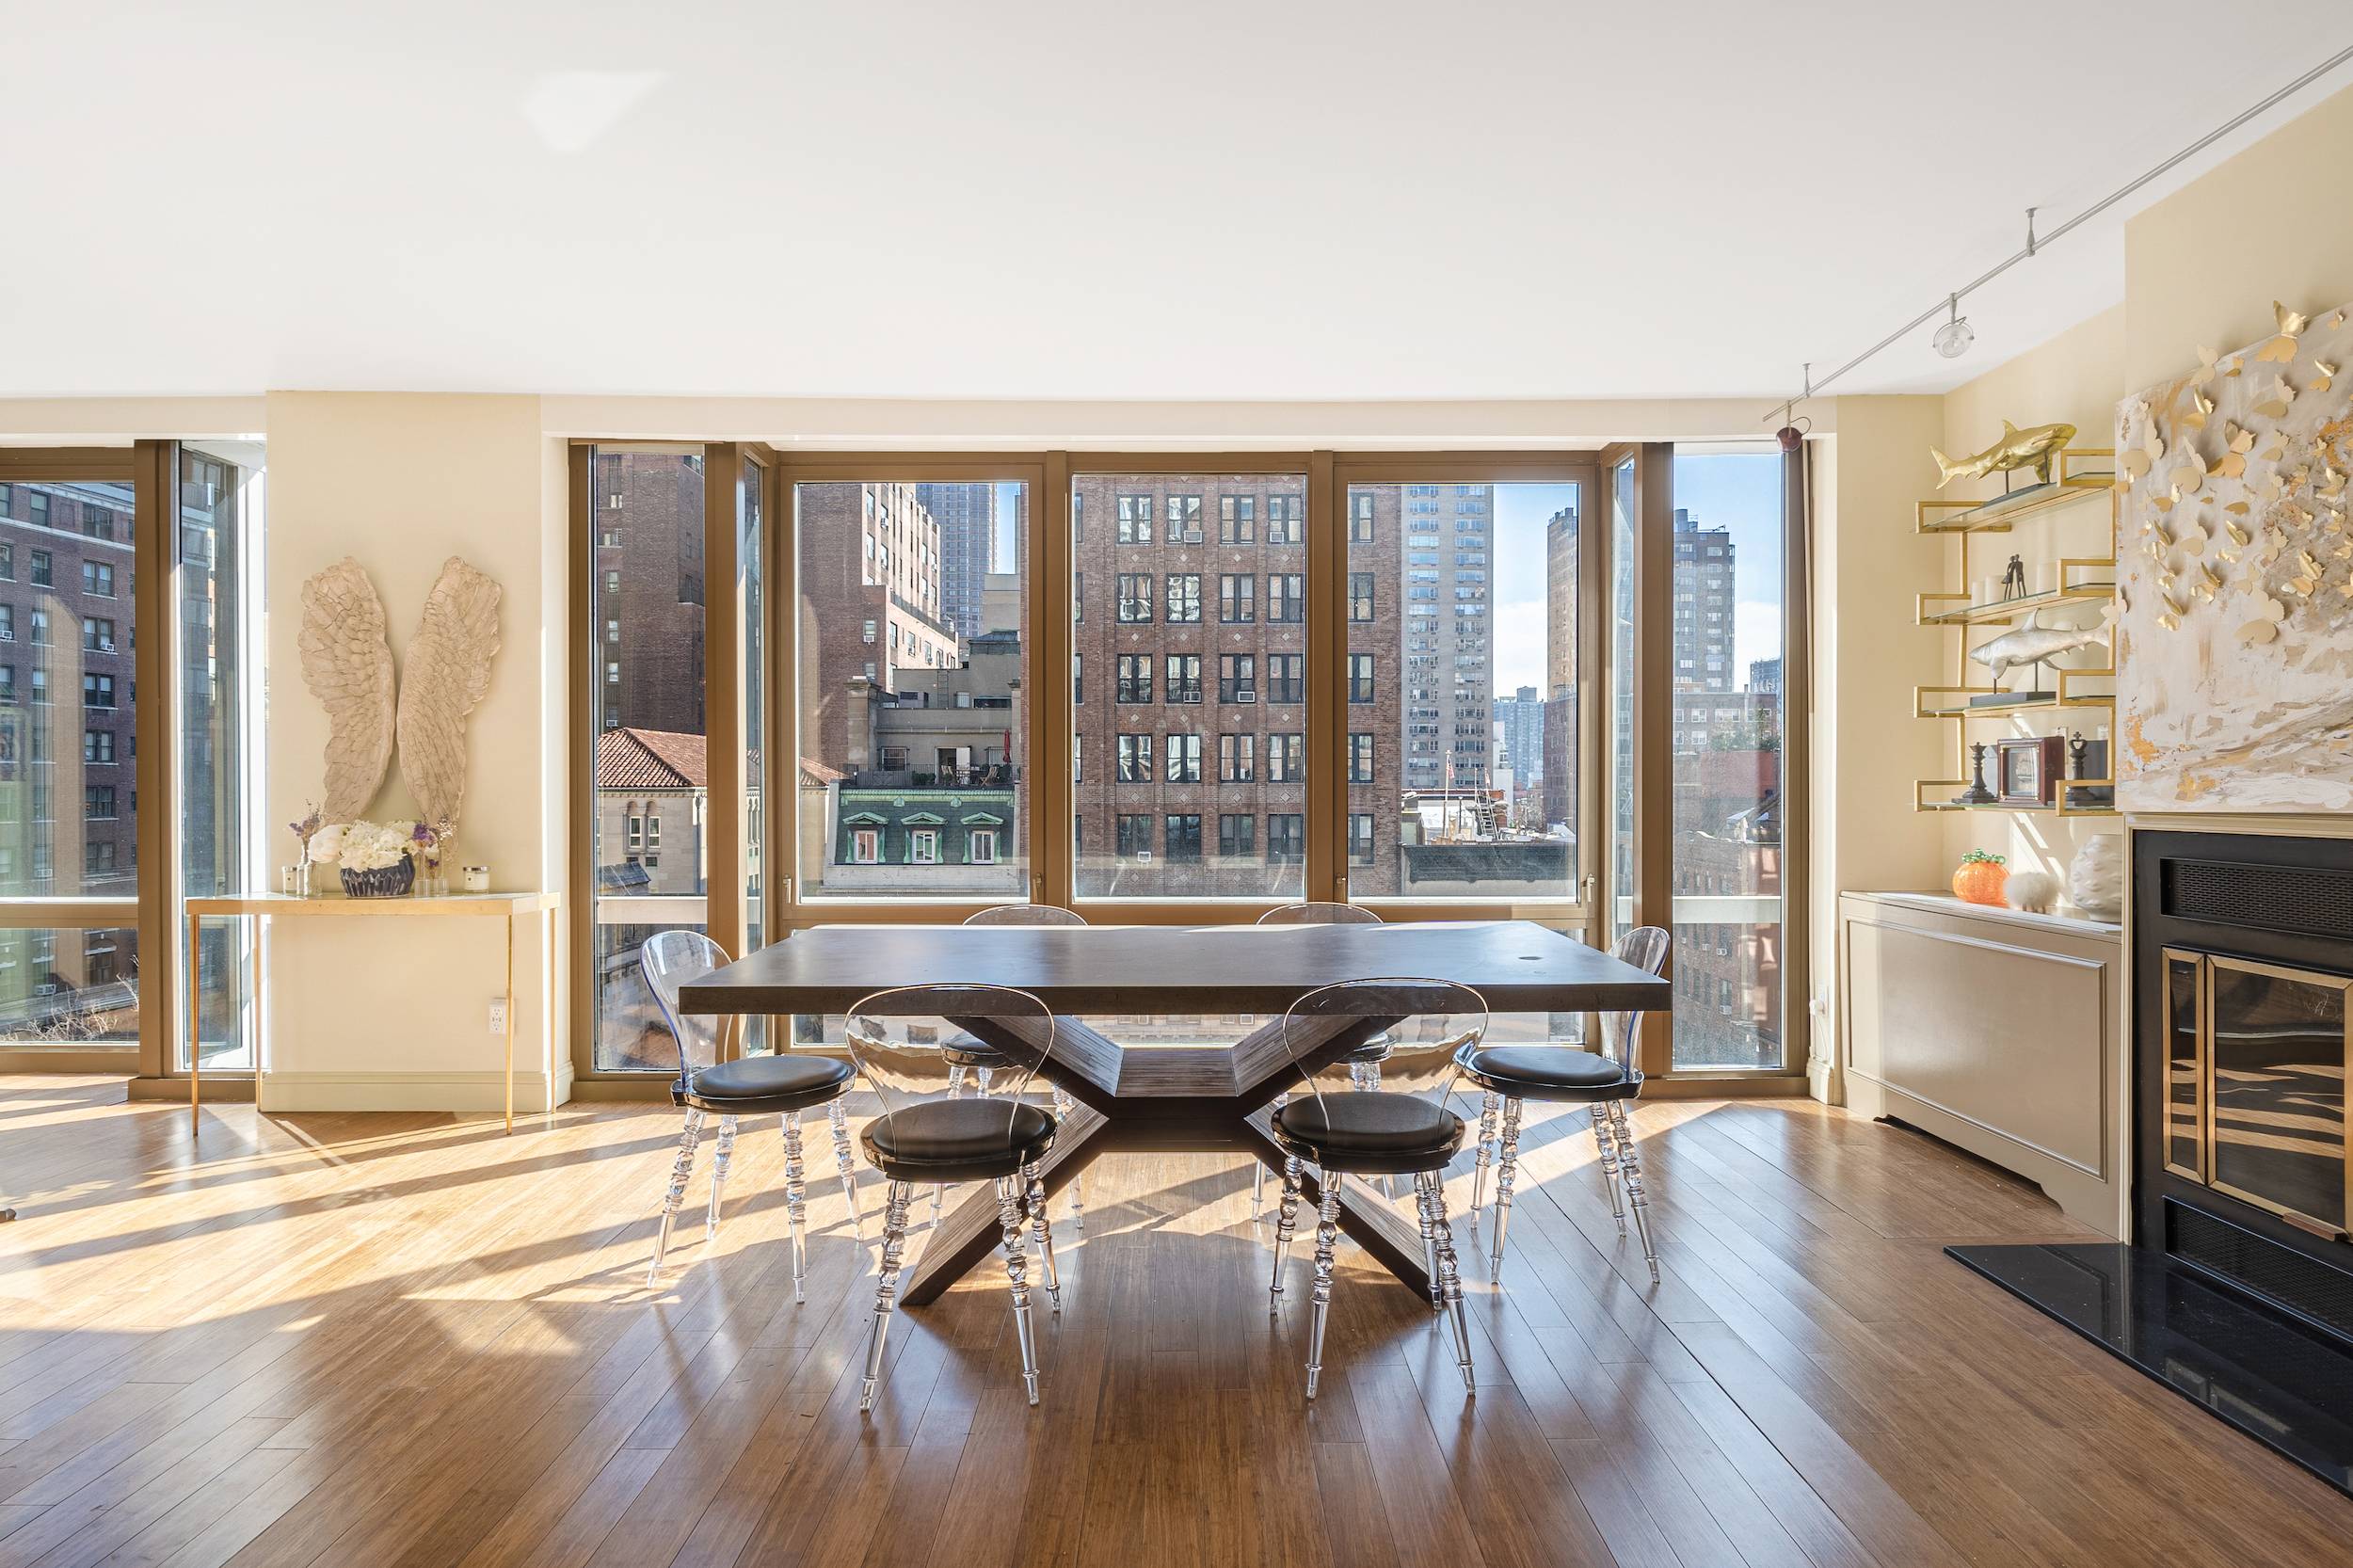 Located on Park Avenue, this beautiful 2 BR 2 BA apartment encompasses the entire 8th Floor of the fine luxury boutique Condominium.